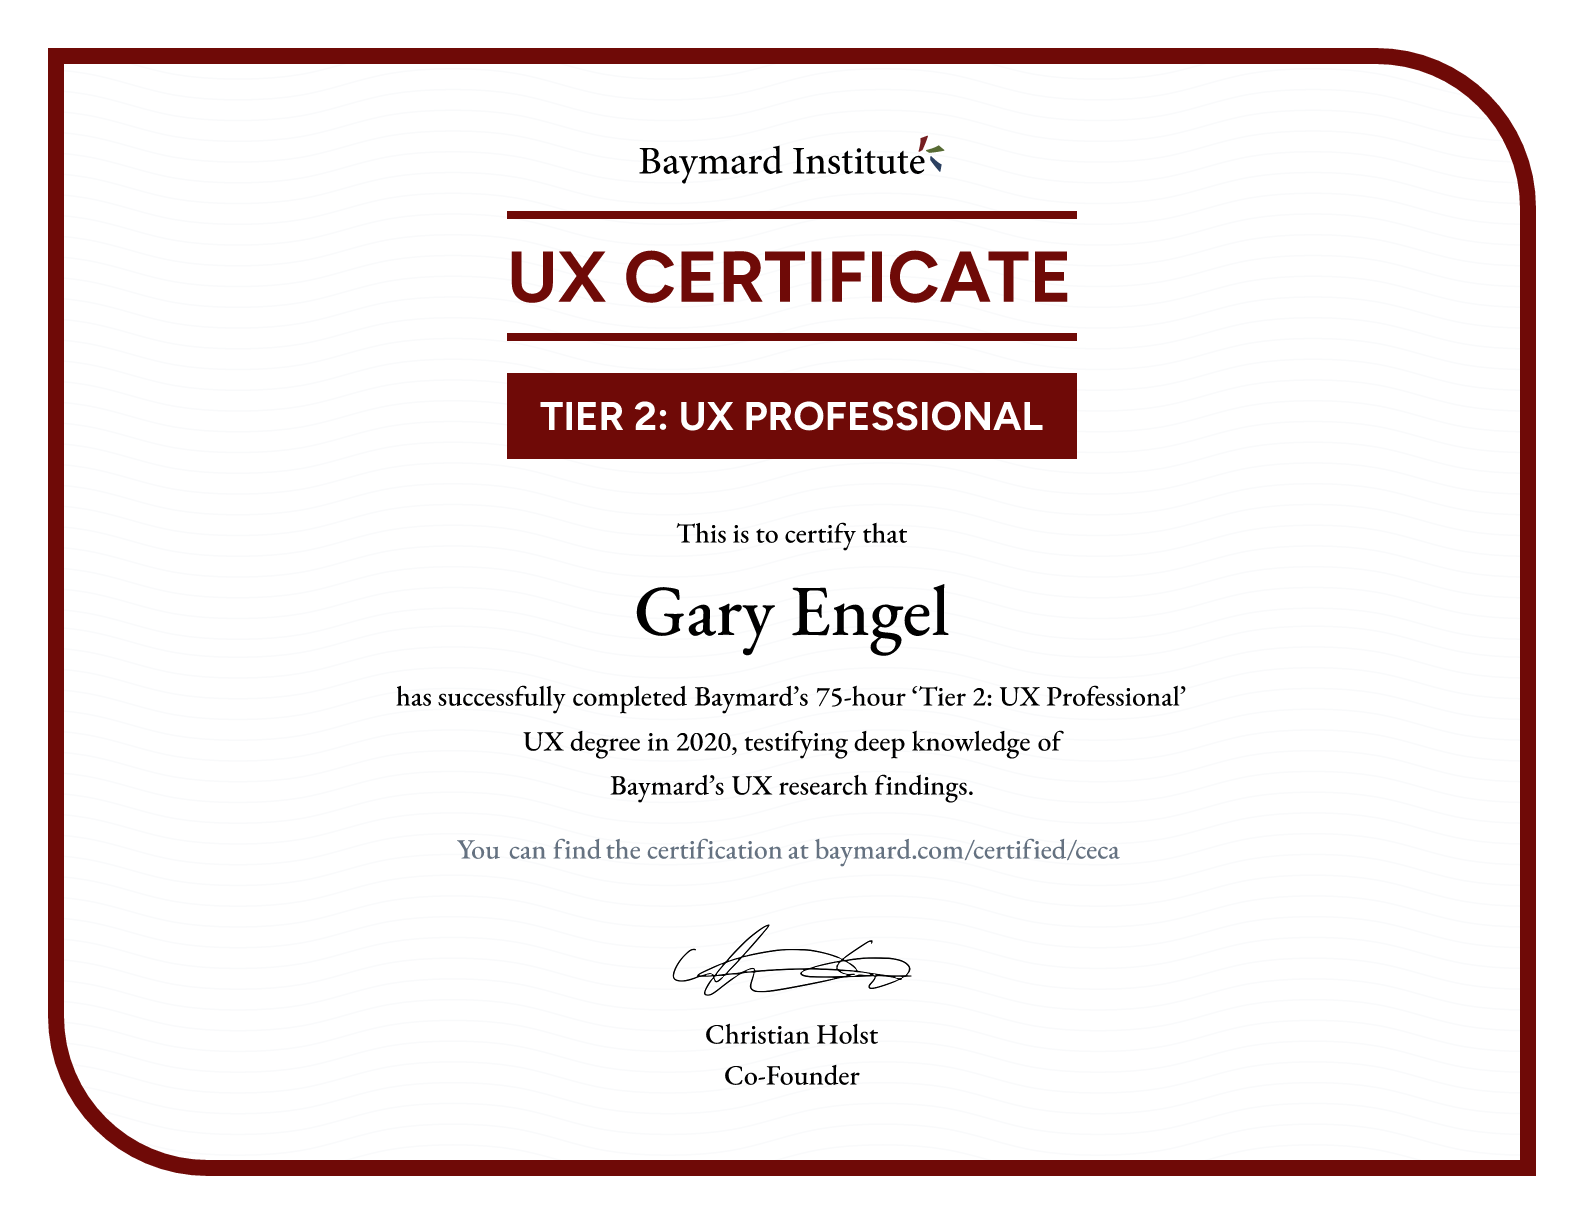 Gary Engel’s certificate